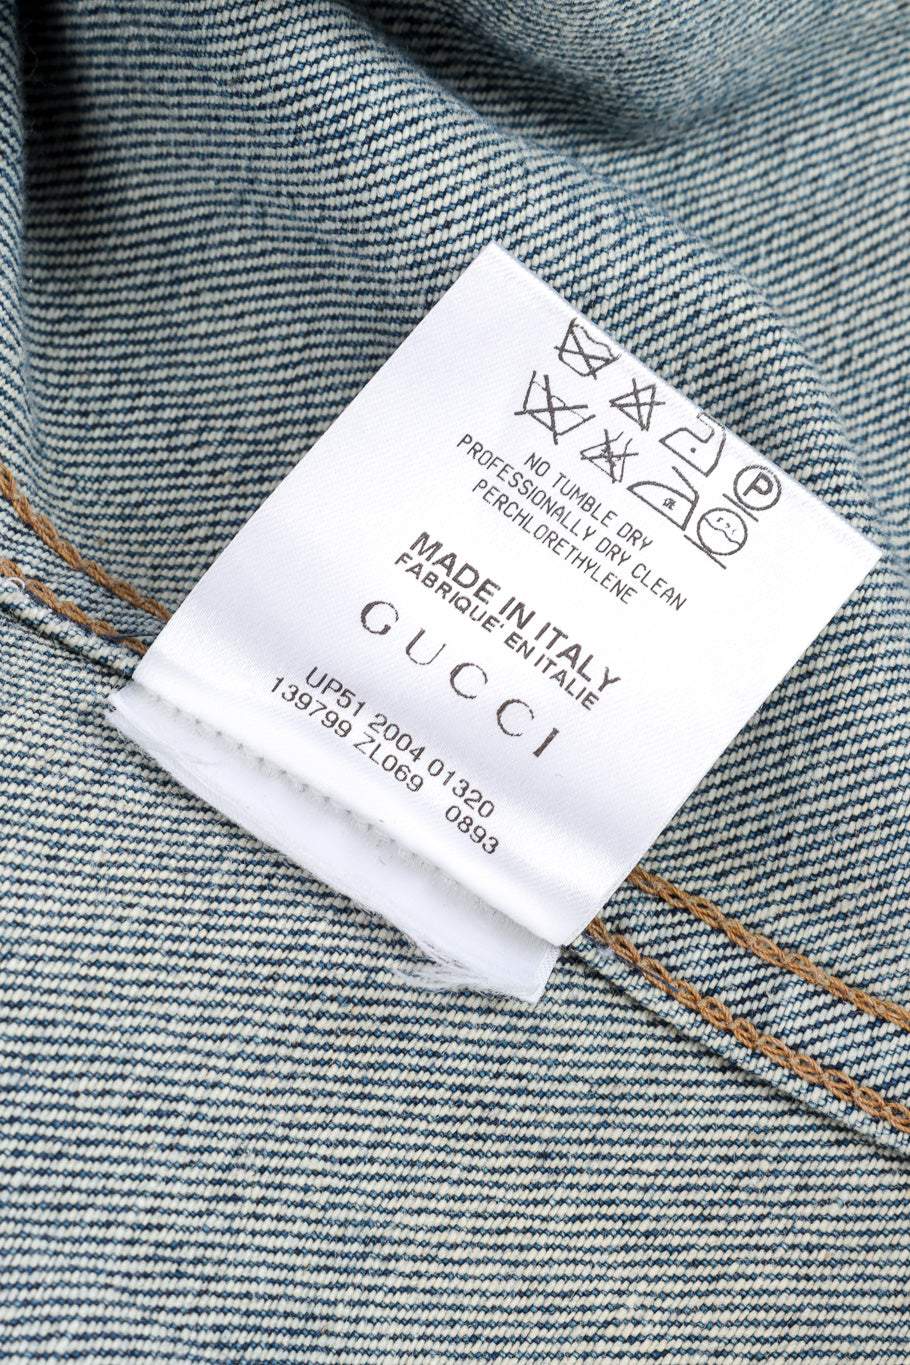 Bamboo Belt Denim Jacket by Gucci fabric tag @recessla